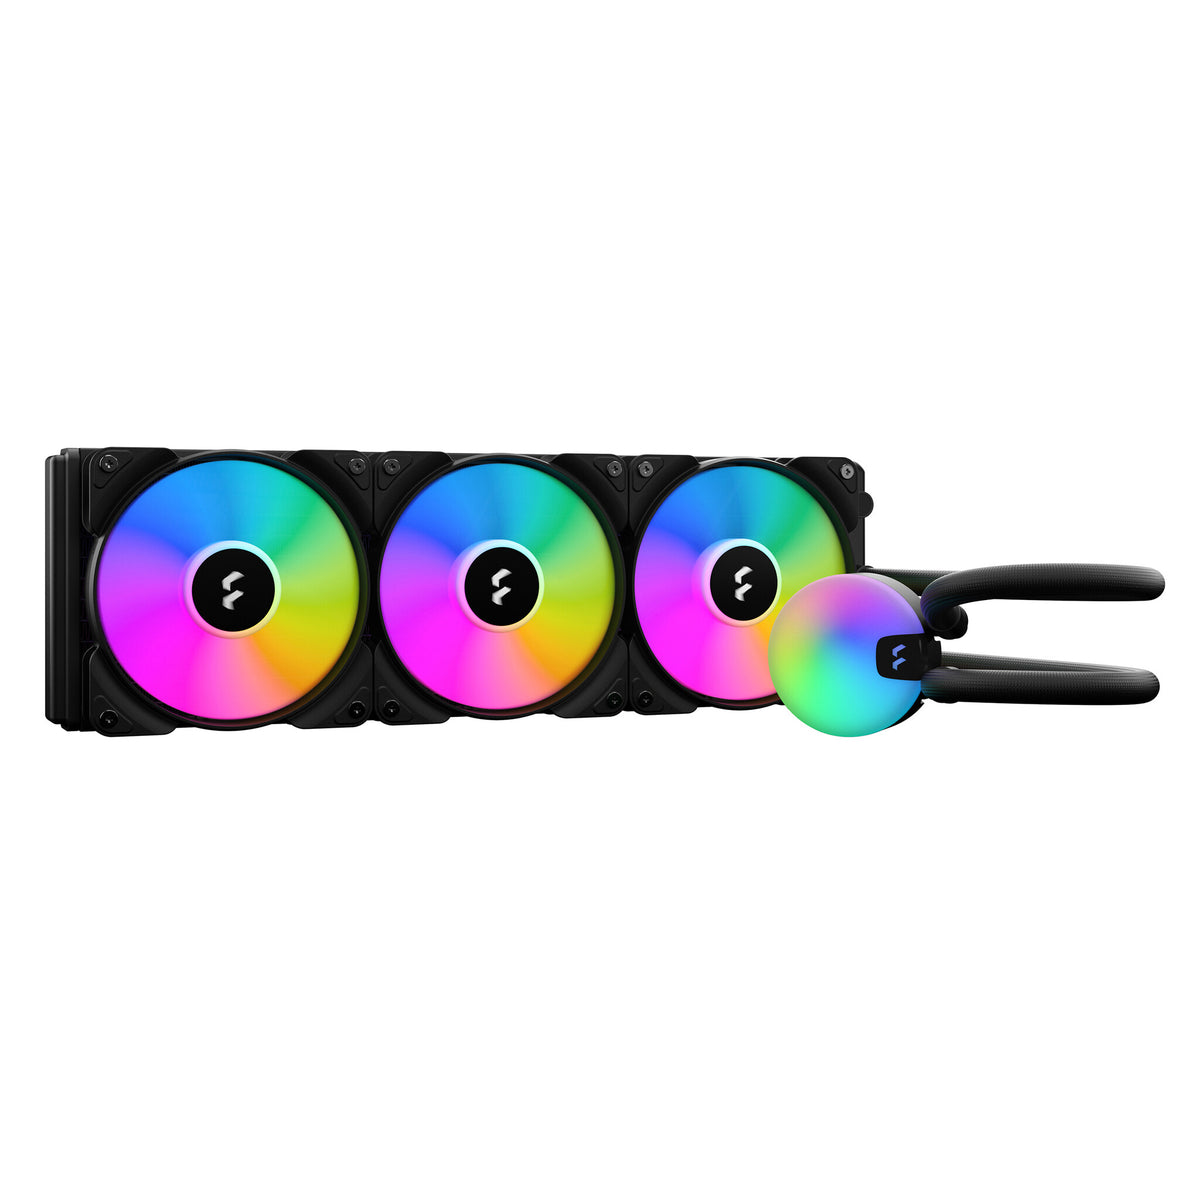 Fractal Design Lumen S36 v2 RGB - All-in-one Liquid CPU Cooler in Black - 360 mm